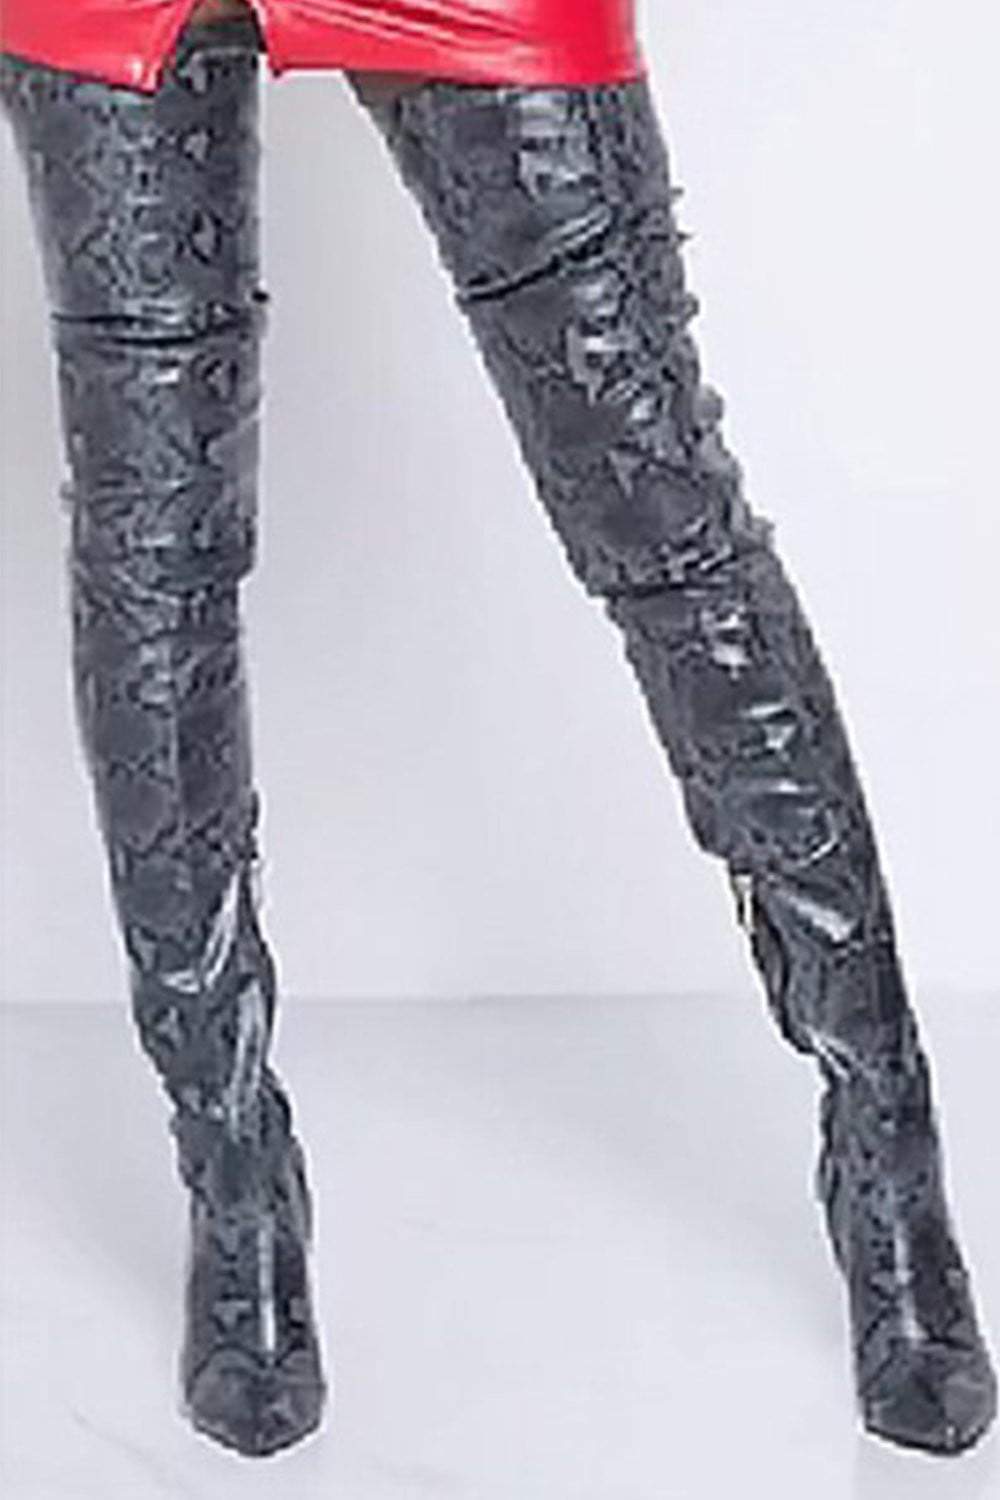 Darkgray Snake Print Stiletto Thigh High Boots (2335400886331)